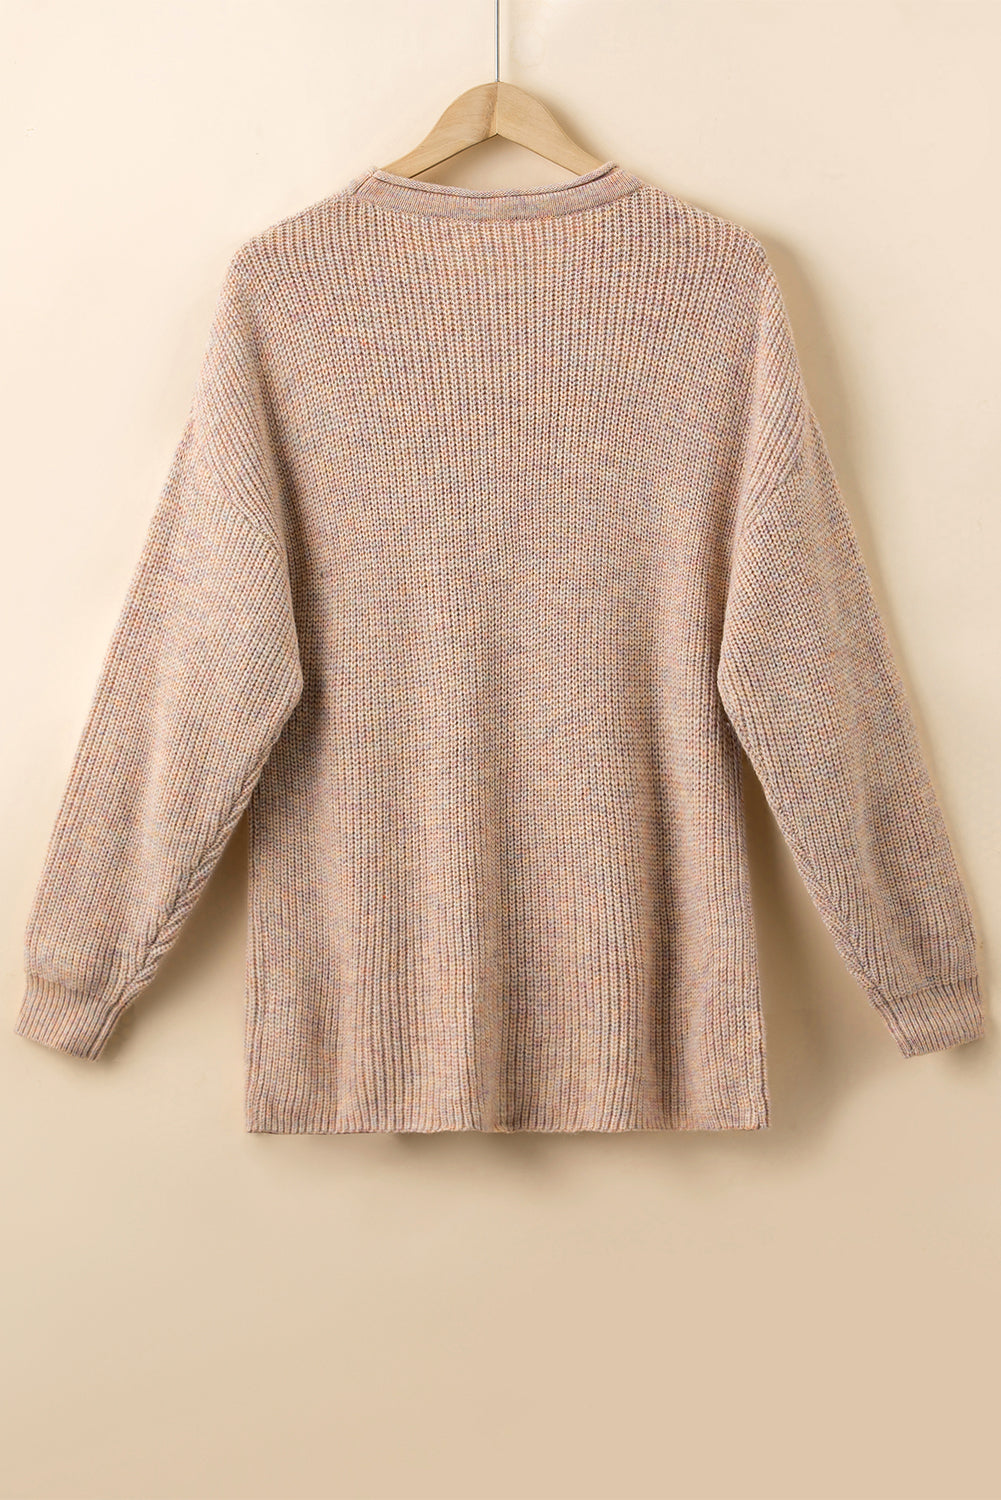 Multicolor Rolled Round Neck Drop Shoulder Sweater